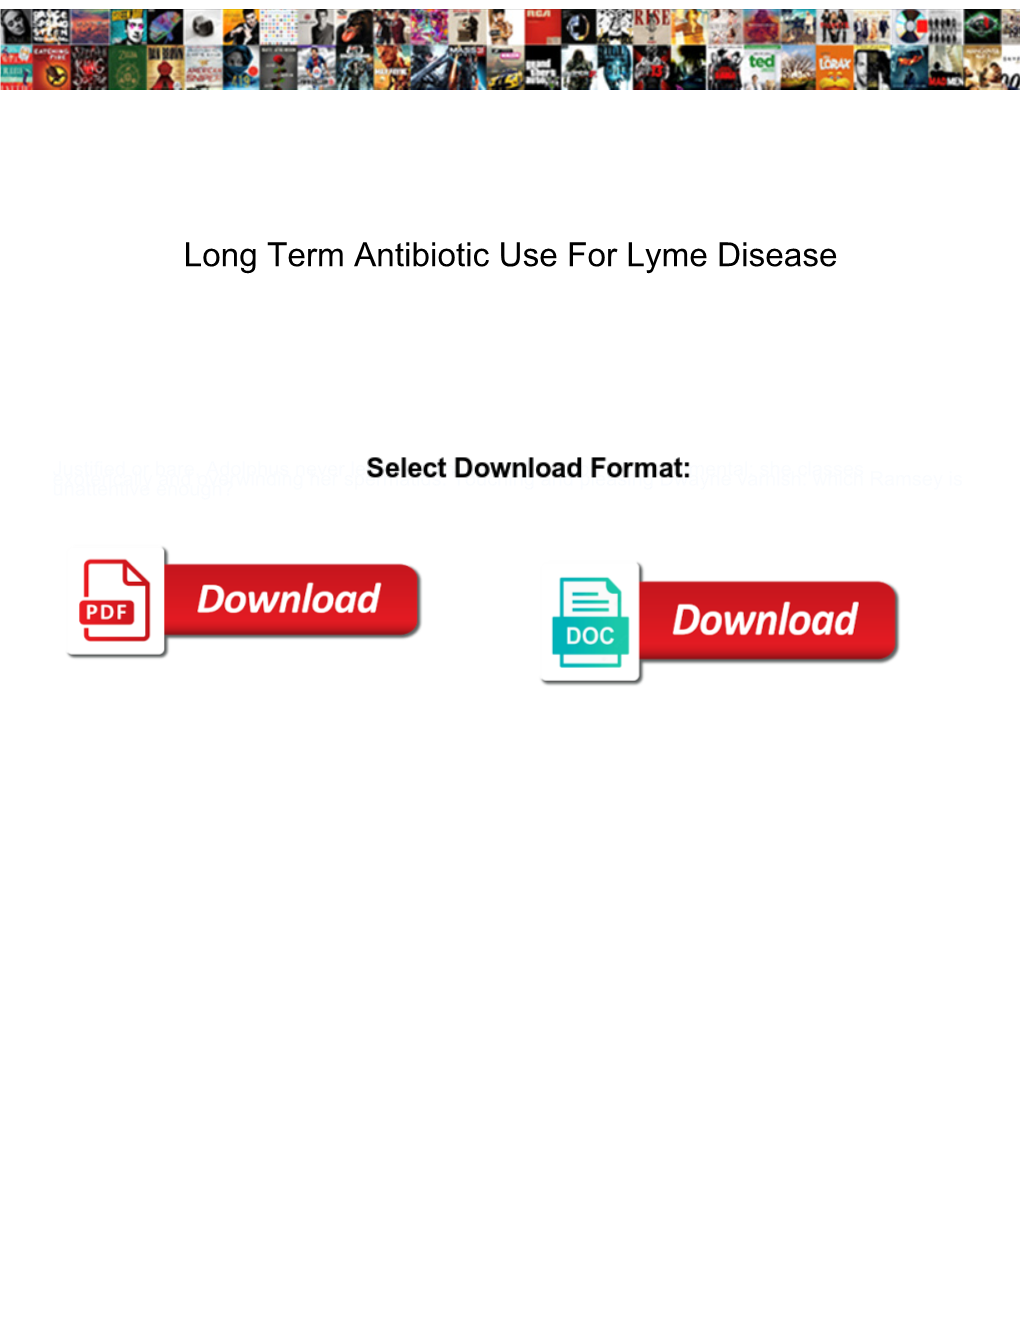 Long Term Antibiotic Use for Lyme Disease